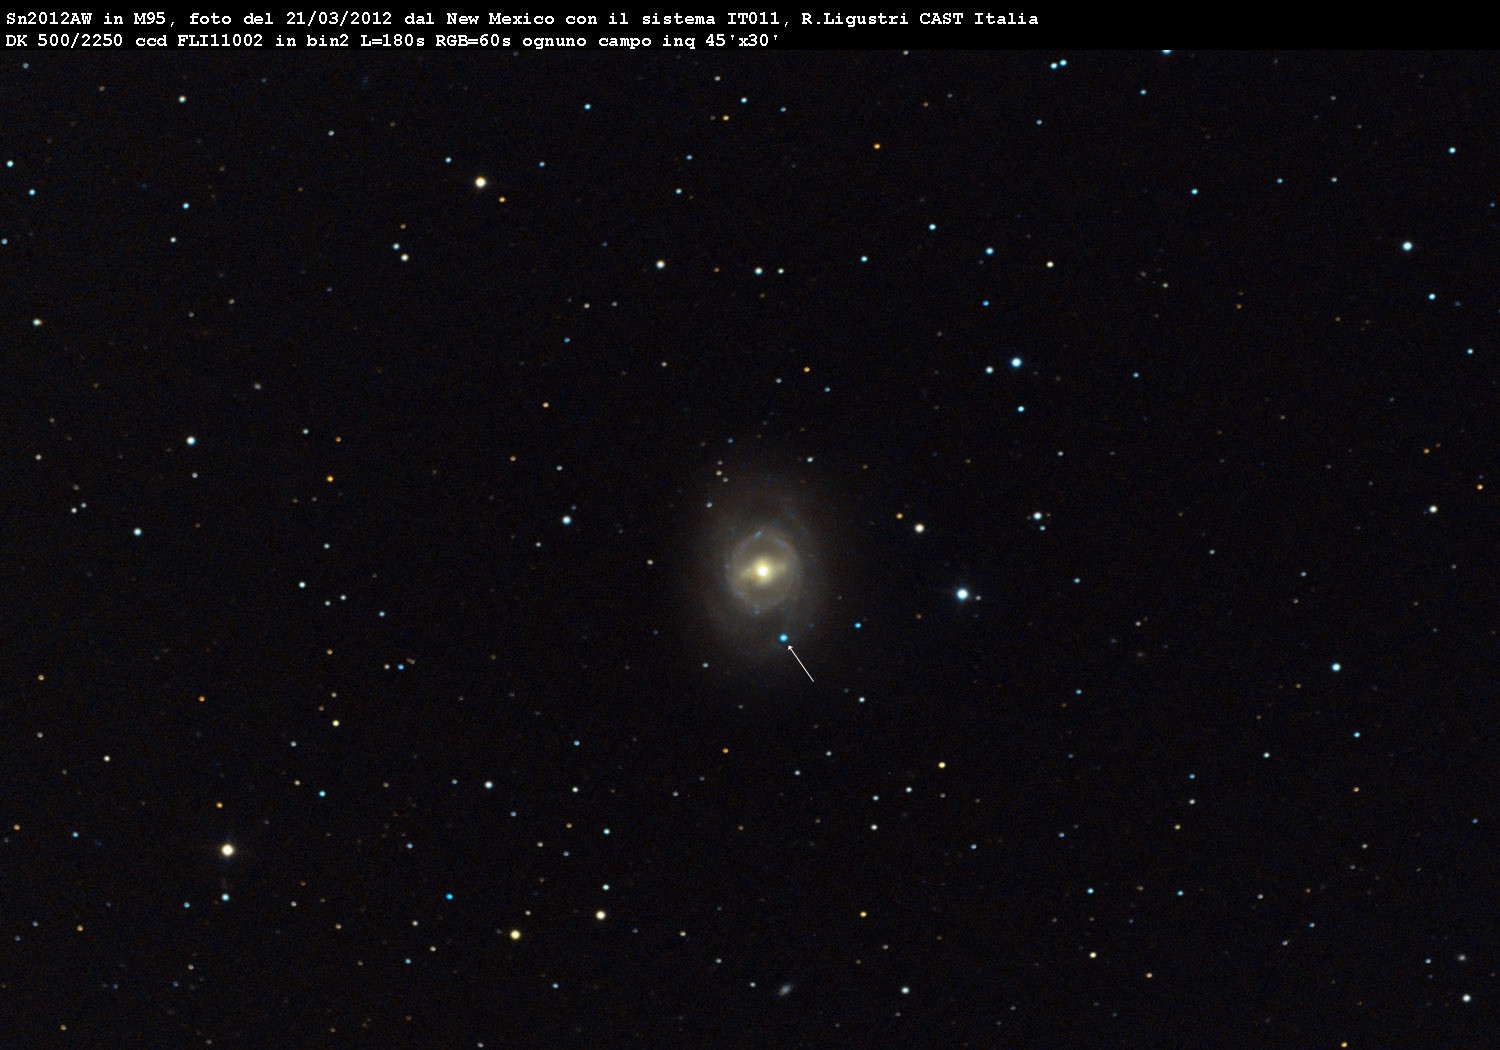 Supernova 2012aw in Messier 95, Not far from Mars 